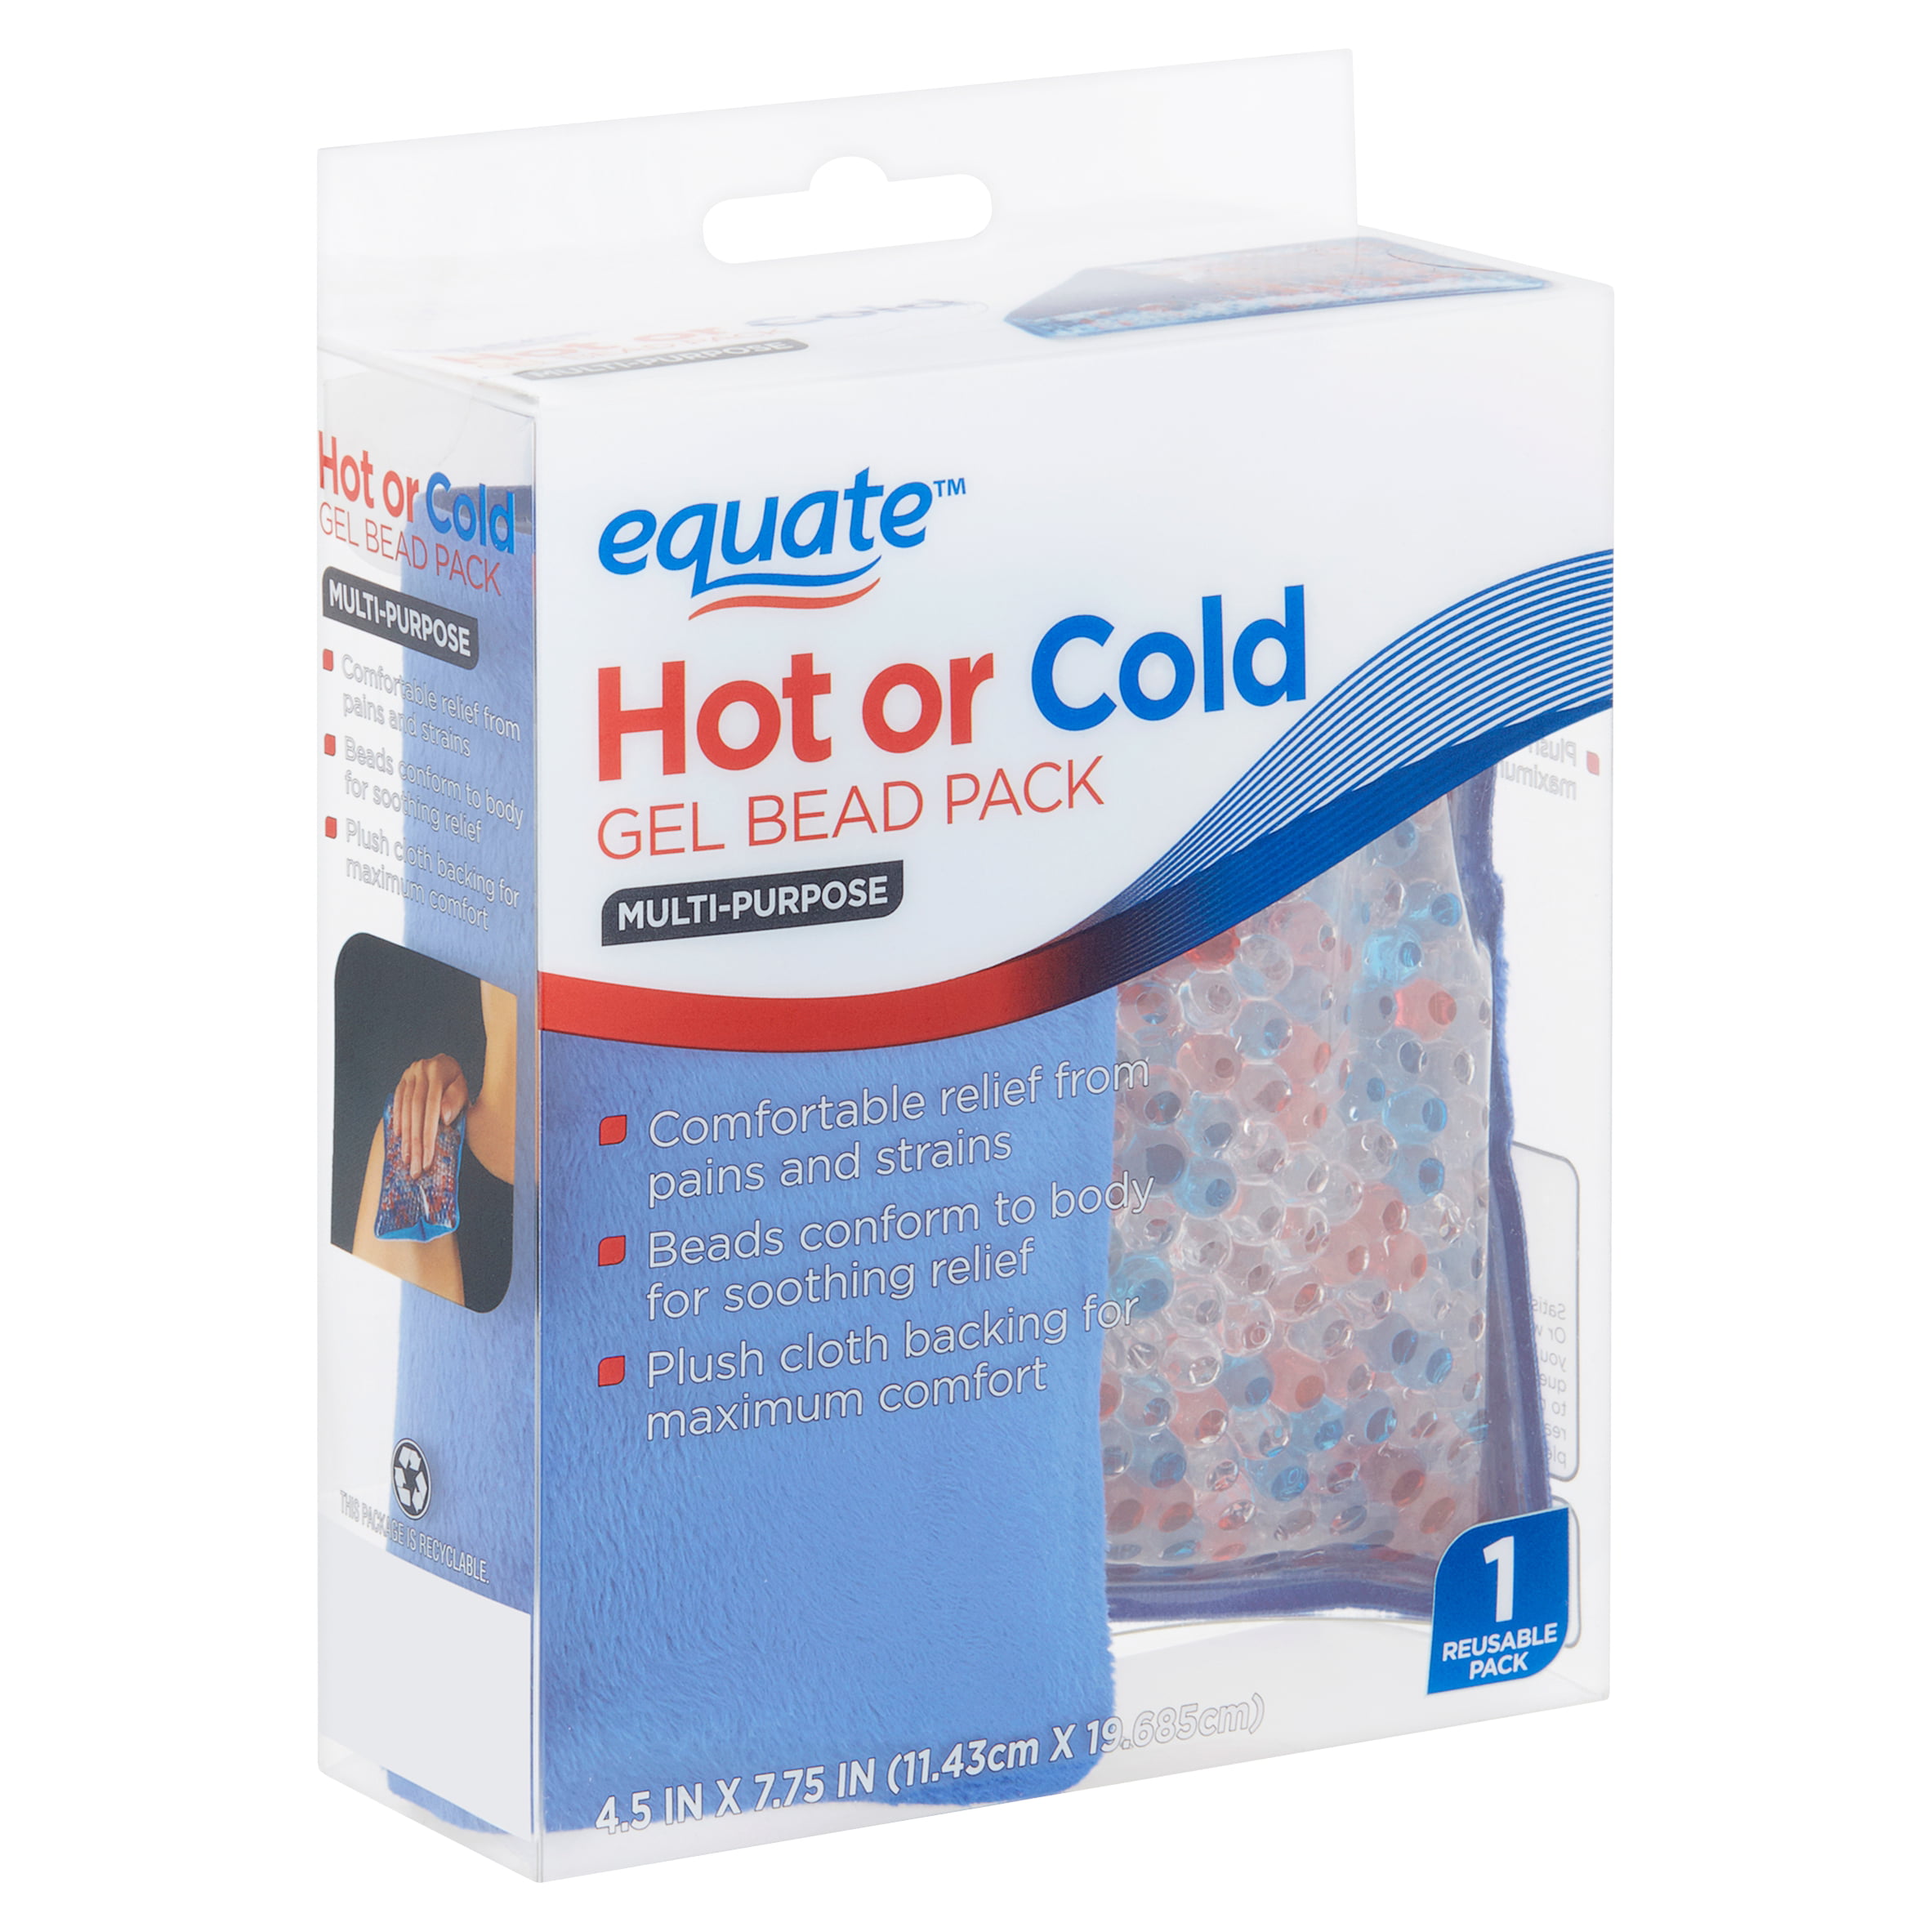 Equate Multi-Purpose Hot or Cold Gel Bead Pack